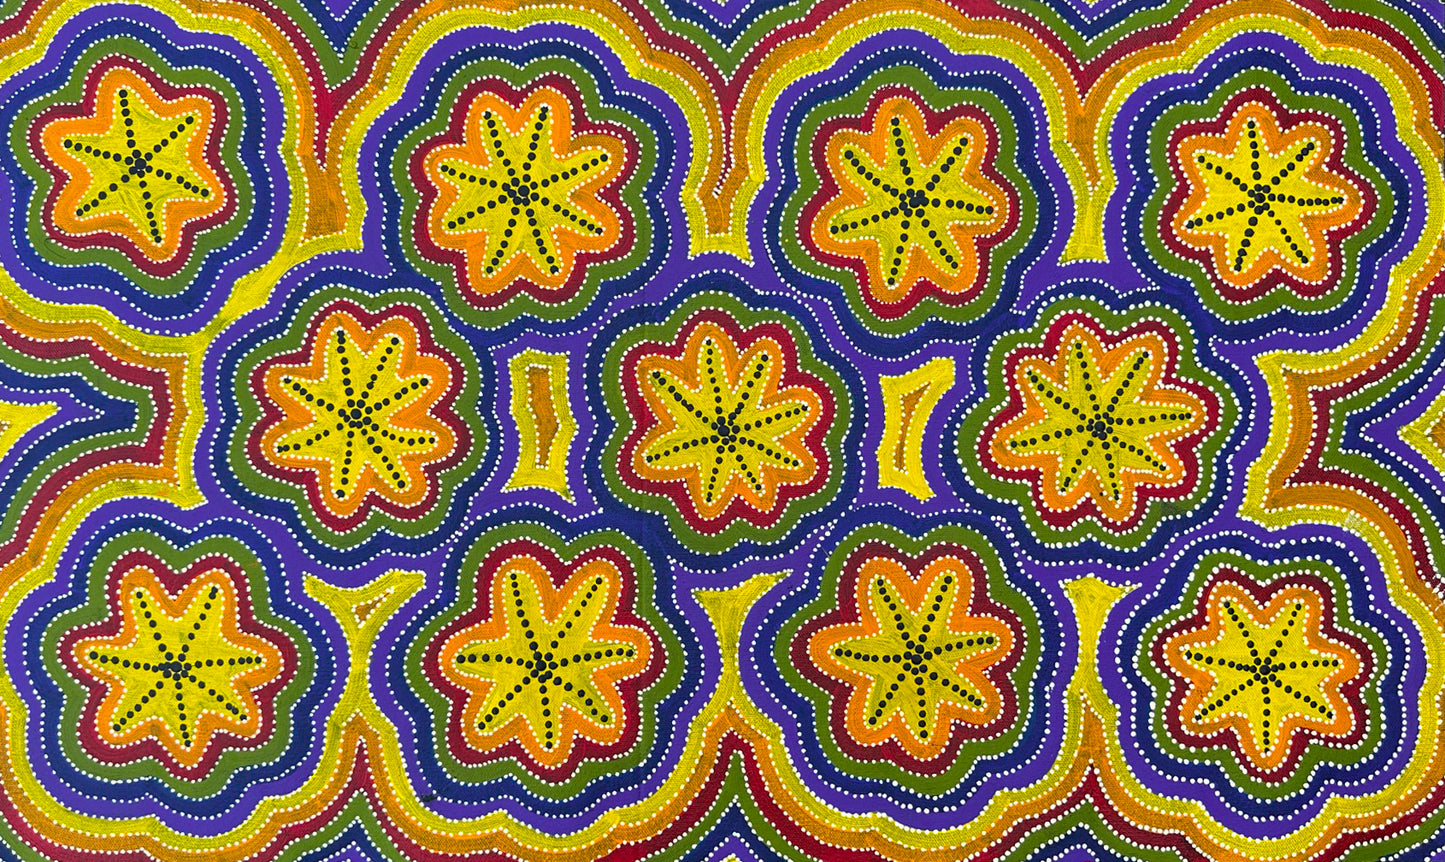 Marie Ryder Napangardi Santa Teresa Ltyentye Apurte Eastern Arrernte Eastern Aboriginal Art Indigenous Art Aboriginal Art Australian Art Bush Flowers Dot Art Painting Contemporary